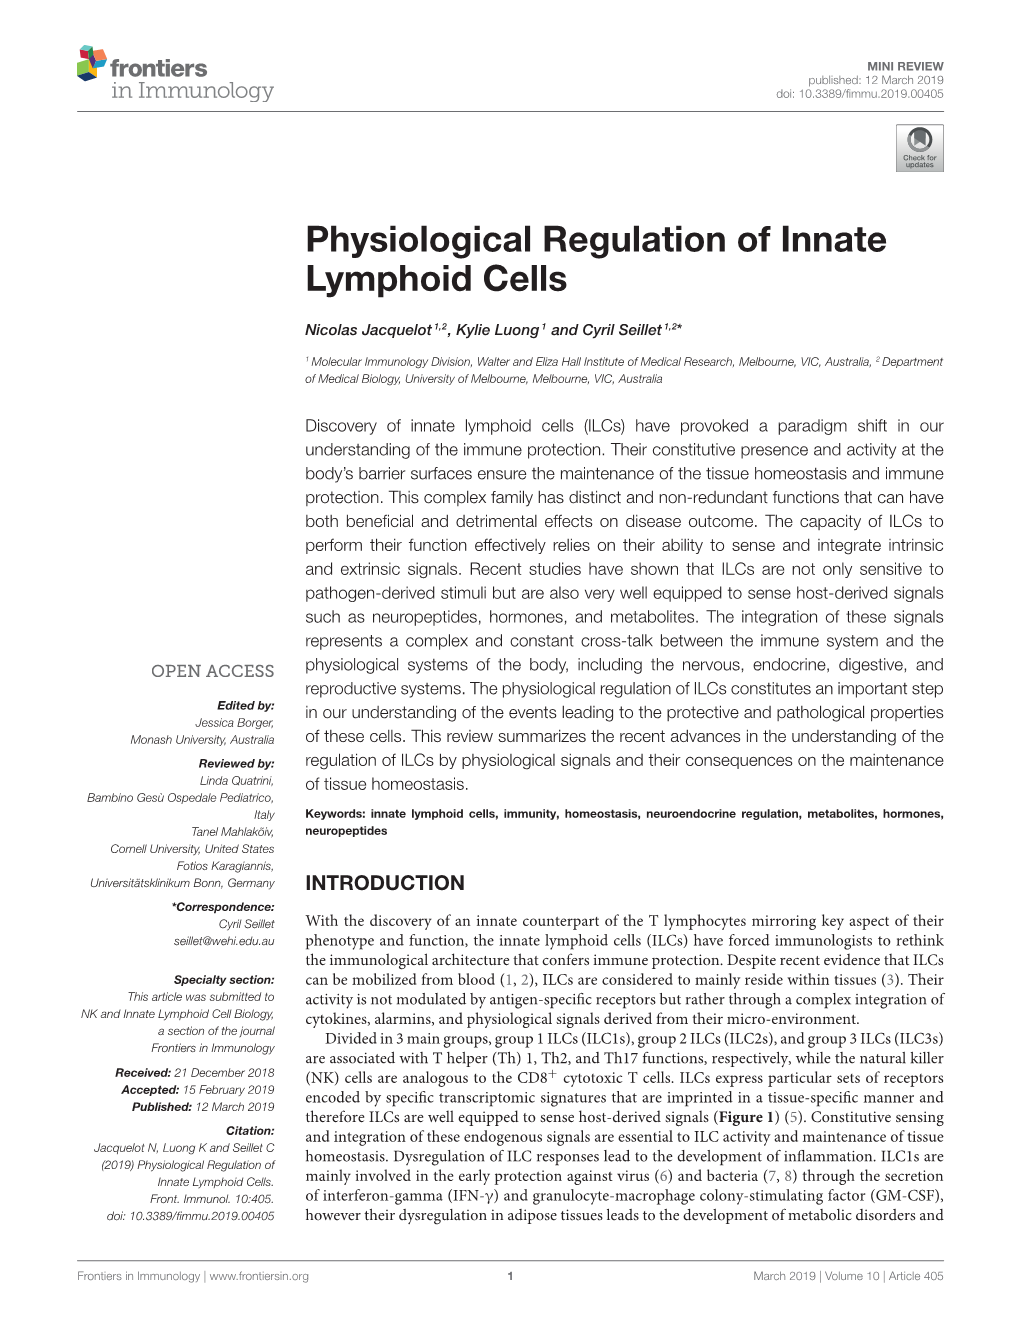 Physiological Regulation of Innate Lymphoid Cells